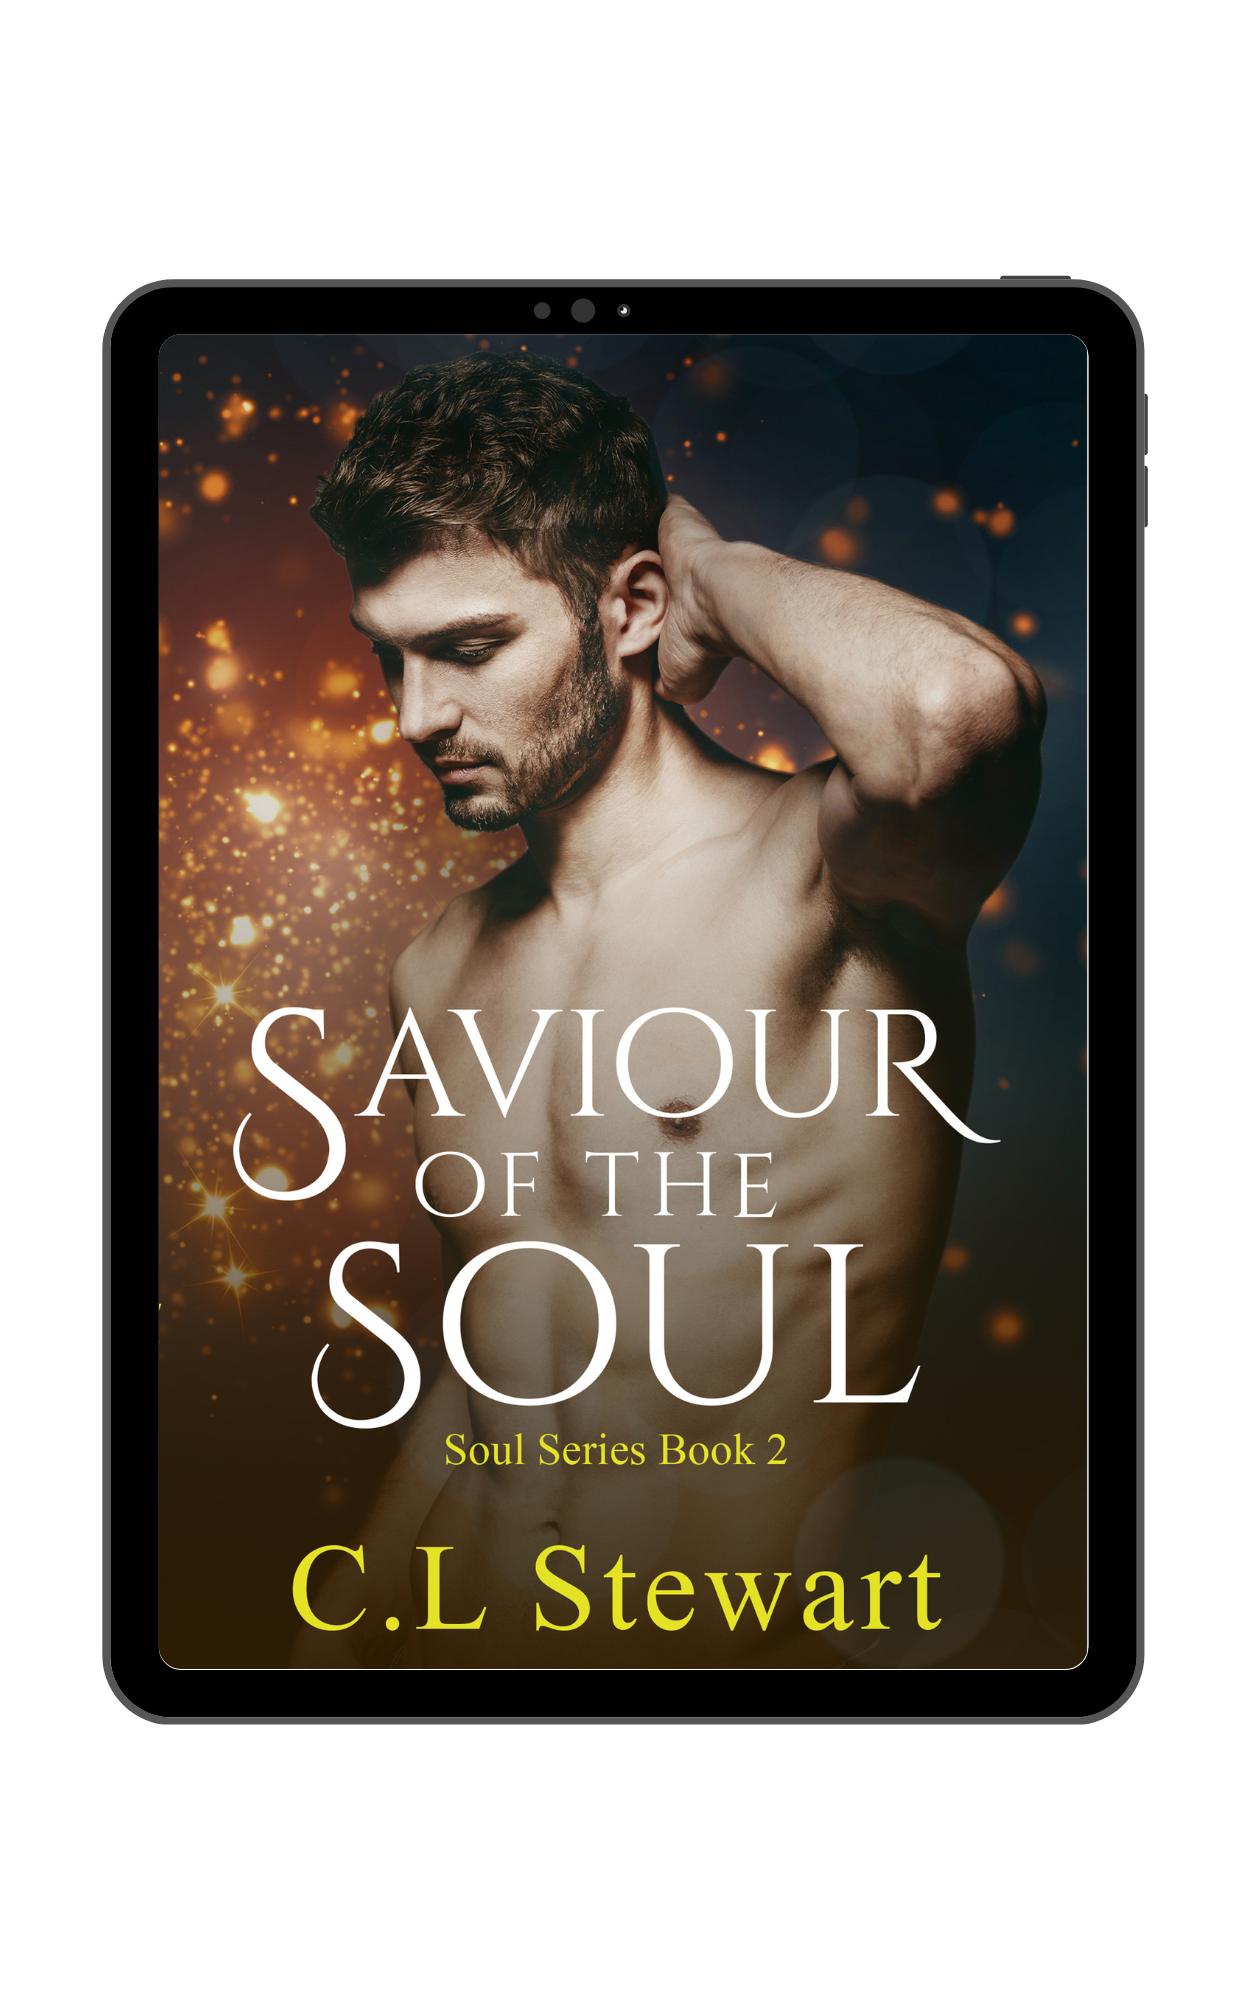 Soul Series Trilogy Book 2 - Saviour of The Soul